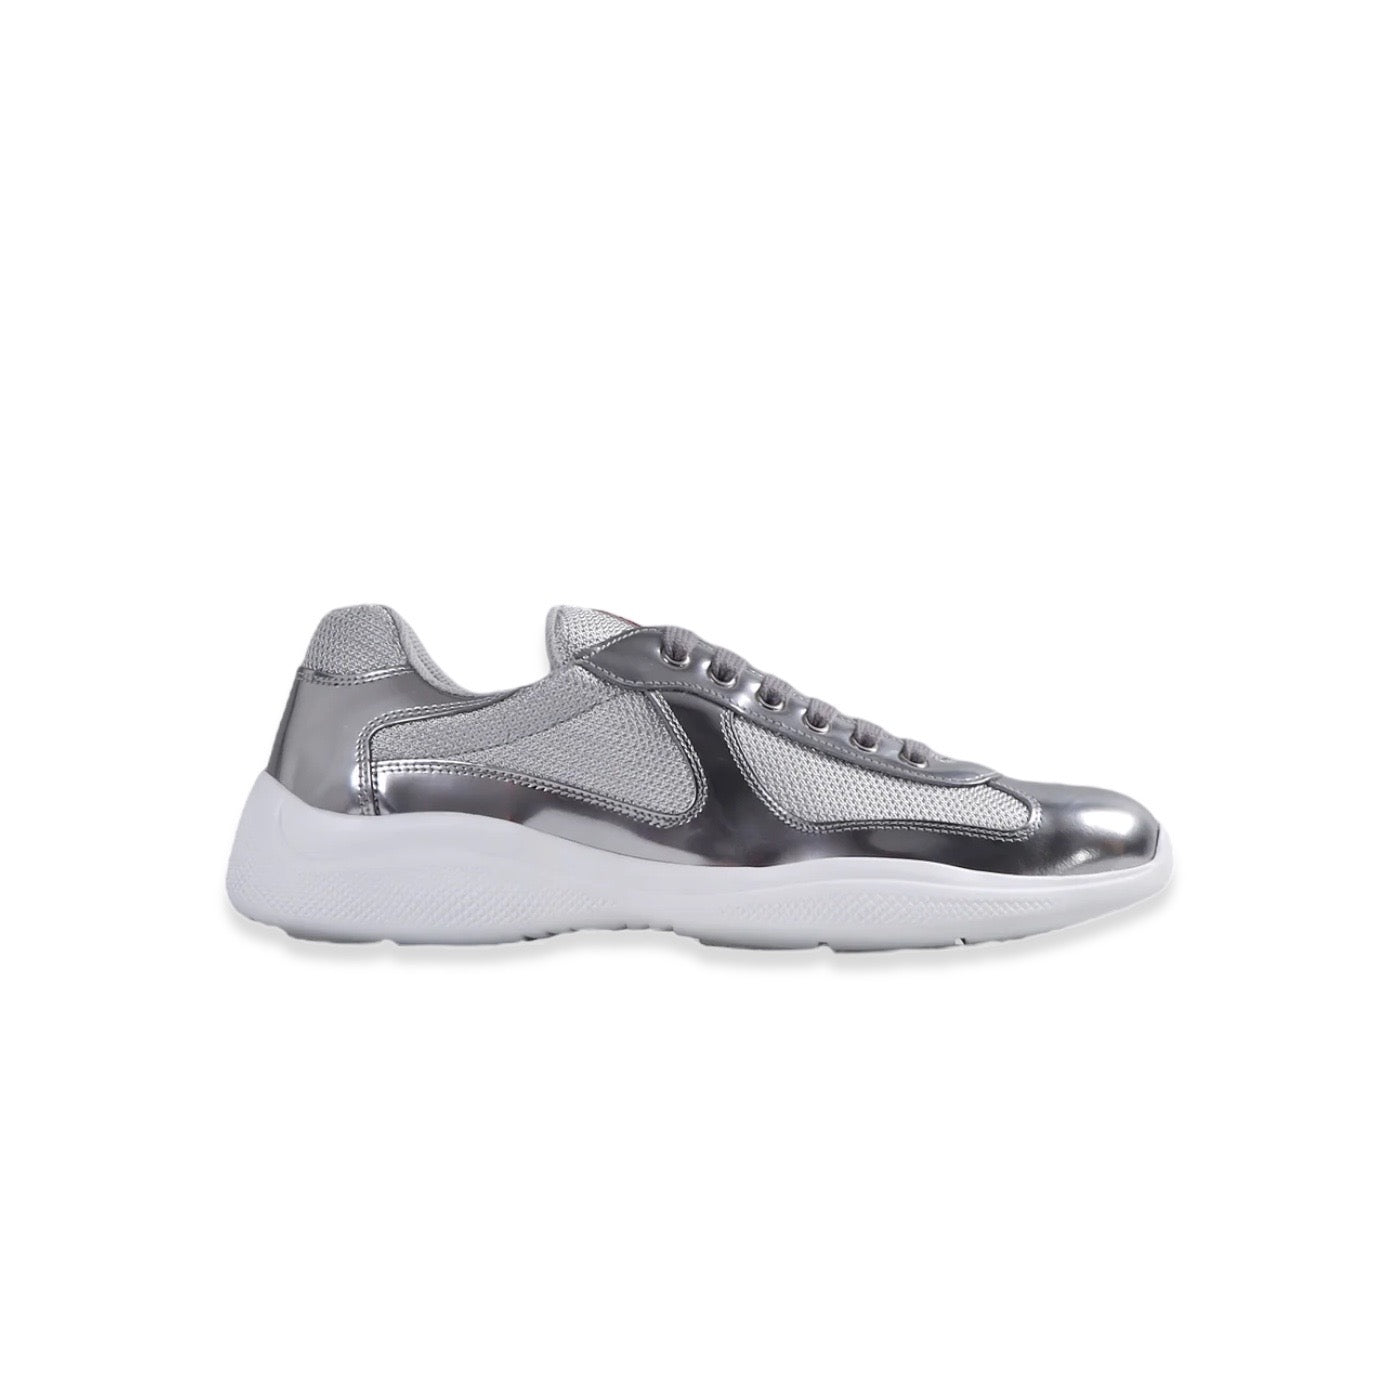 Prada - America's Cup Silver Sneakers